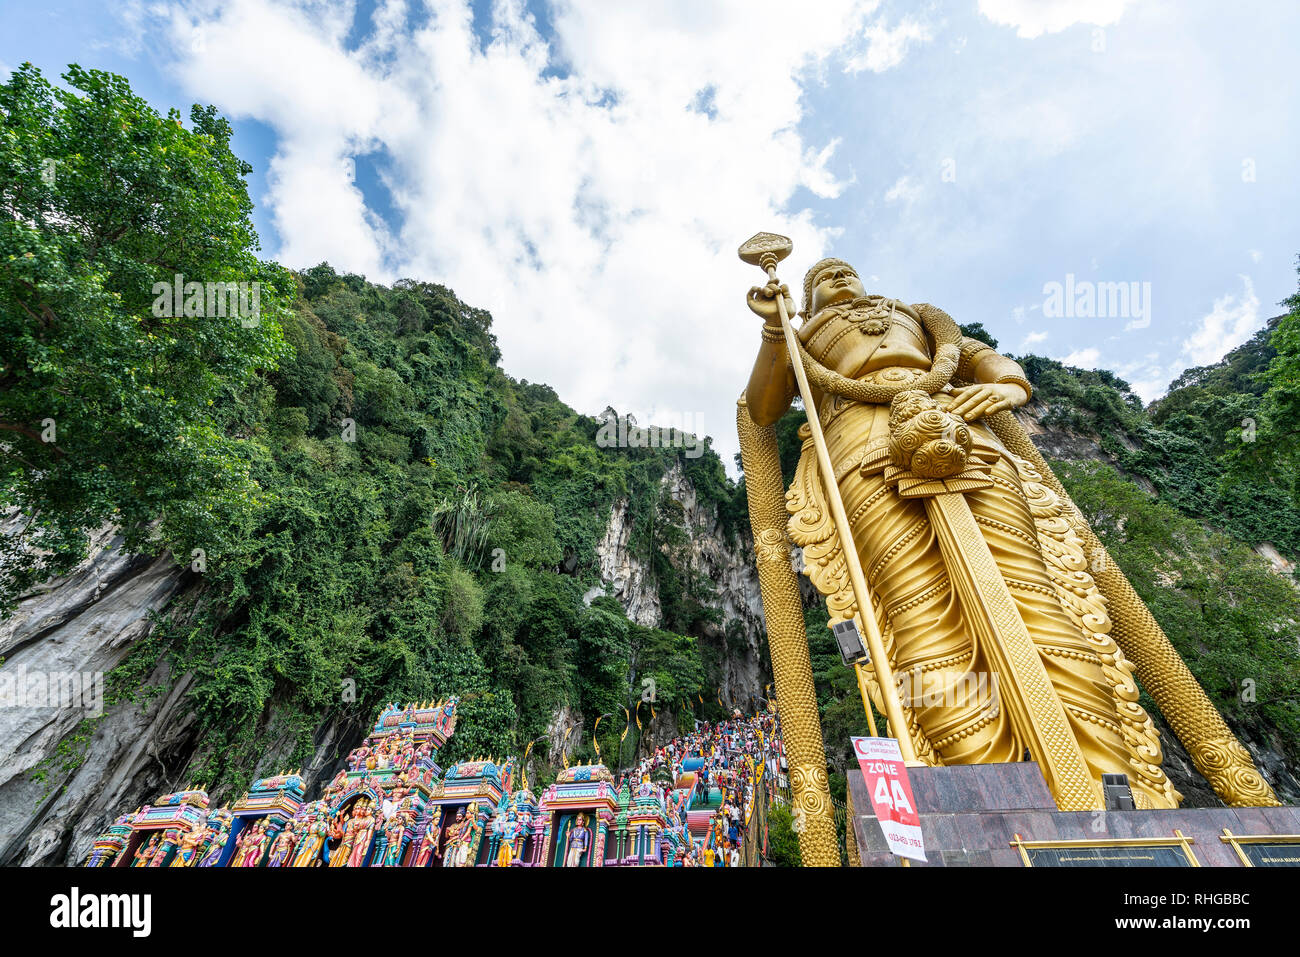 The great statue at Batu Caves, Kuala Lumpur, Malaysia Stock Photo